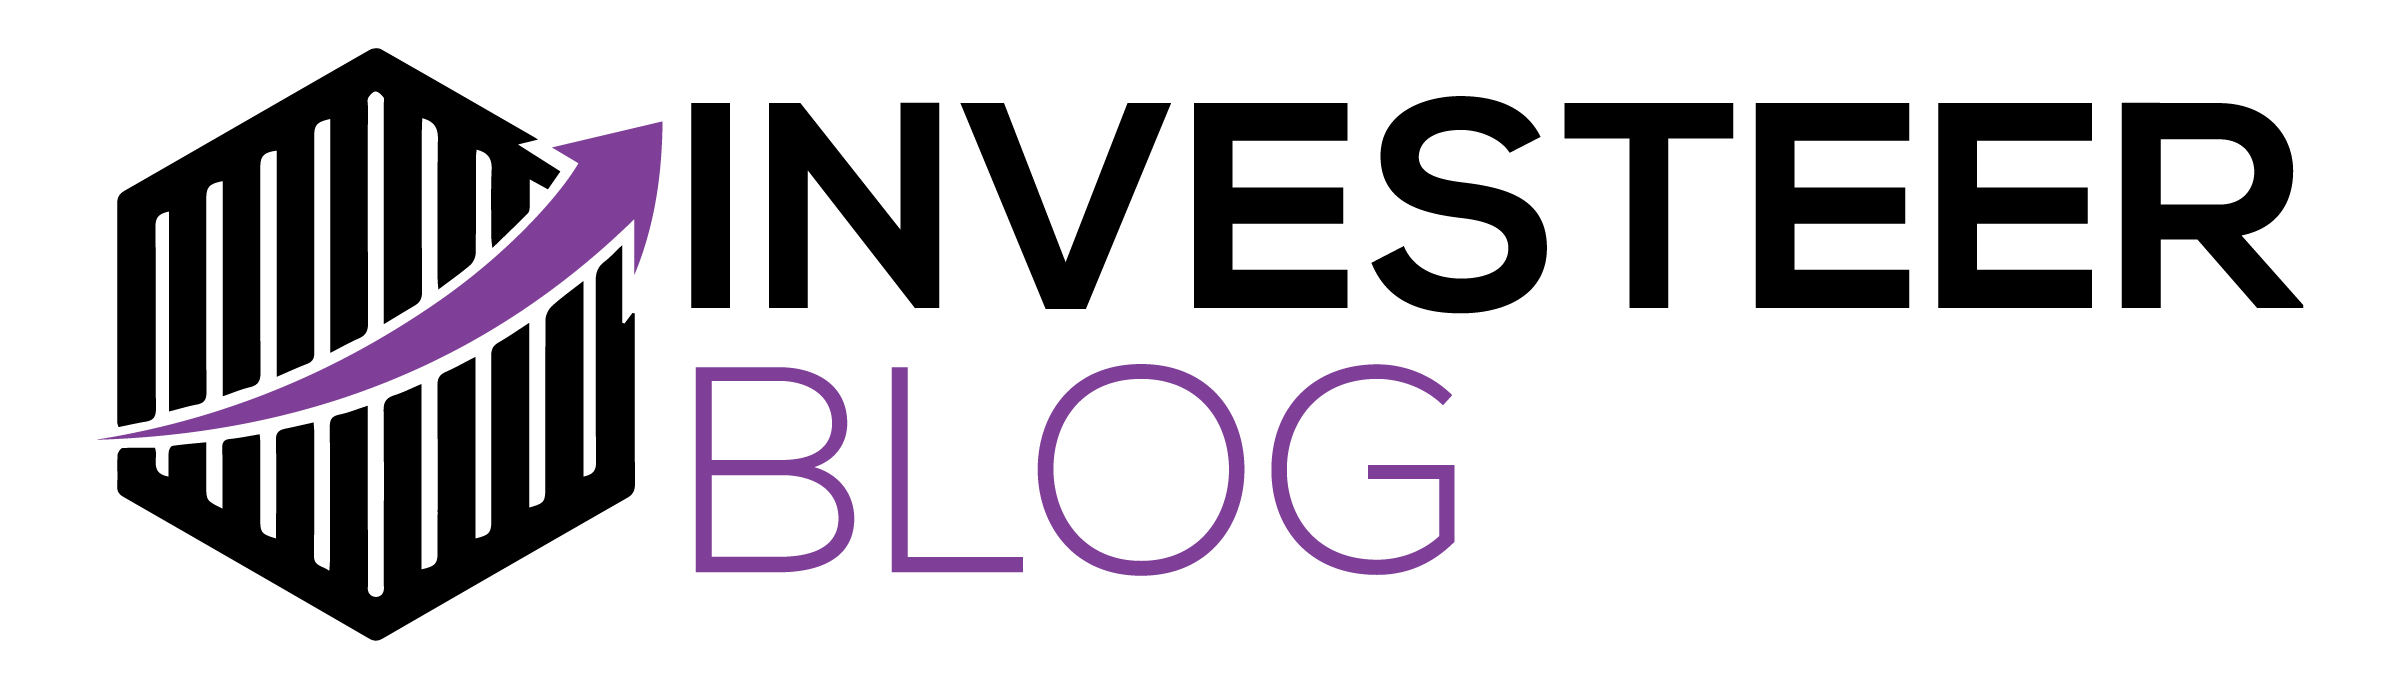 Investeer Blog